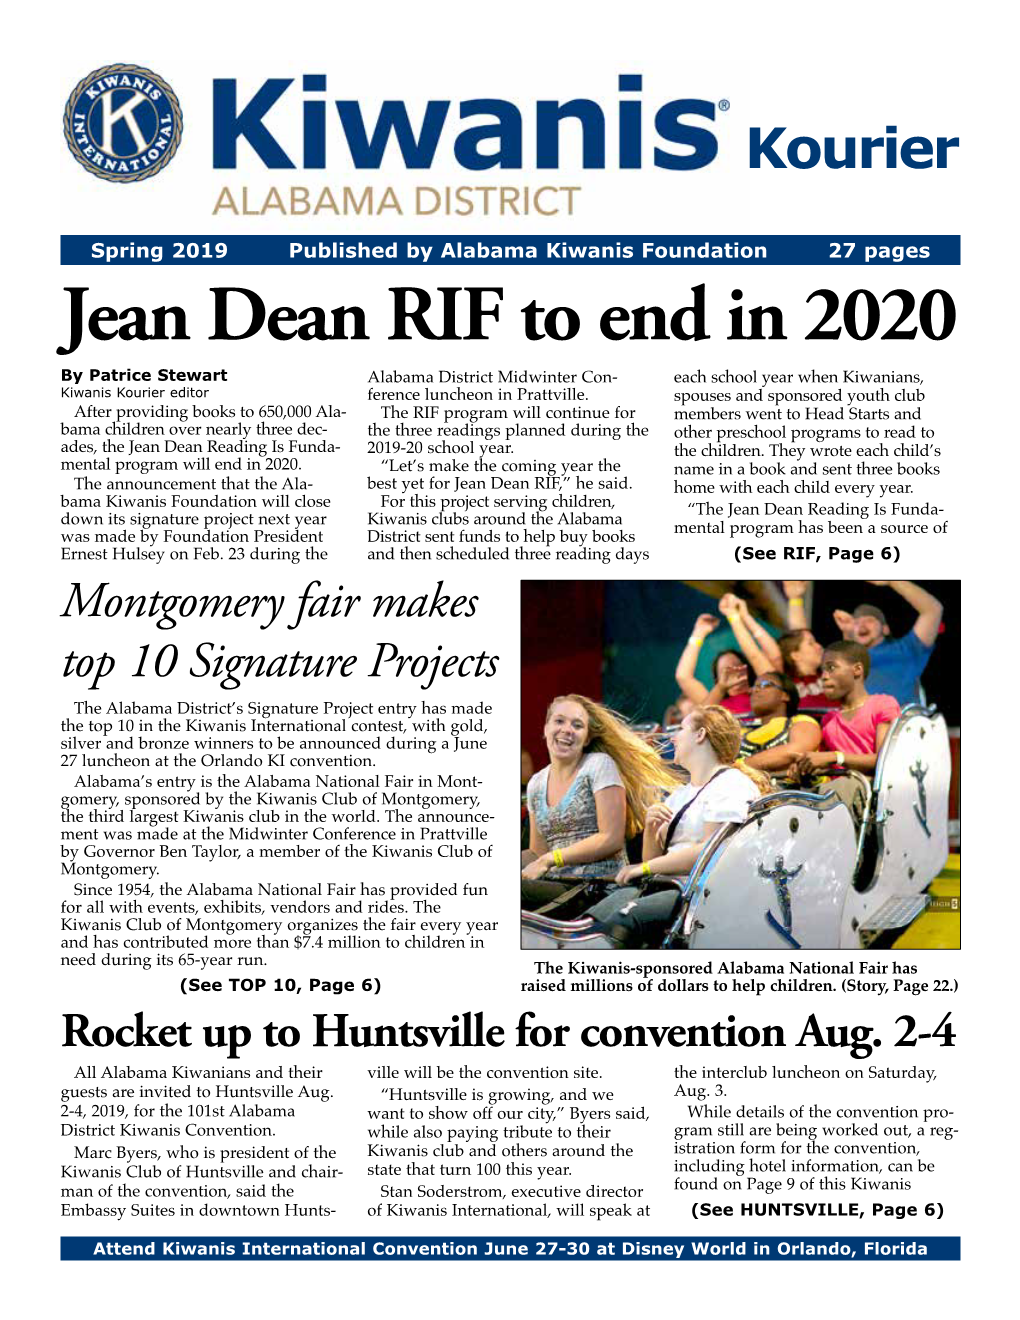 Jean Dean RIF to End in 2020